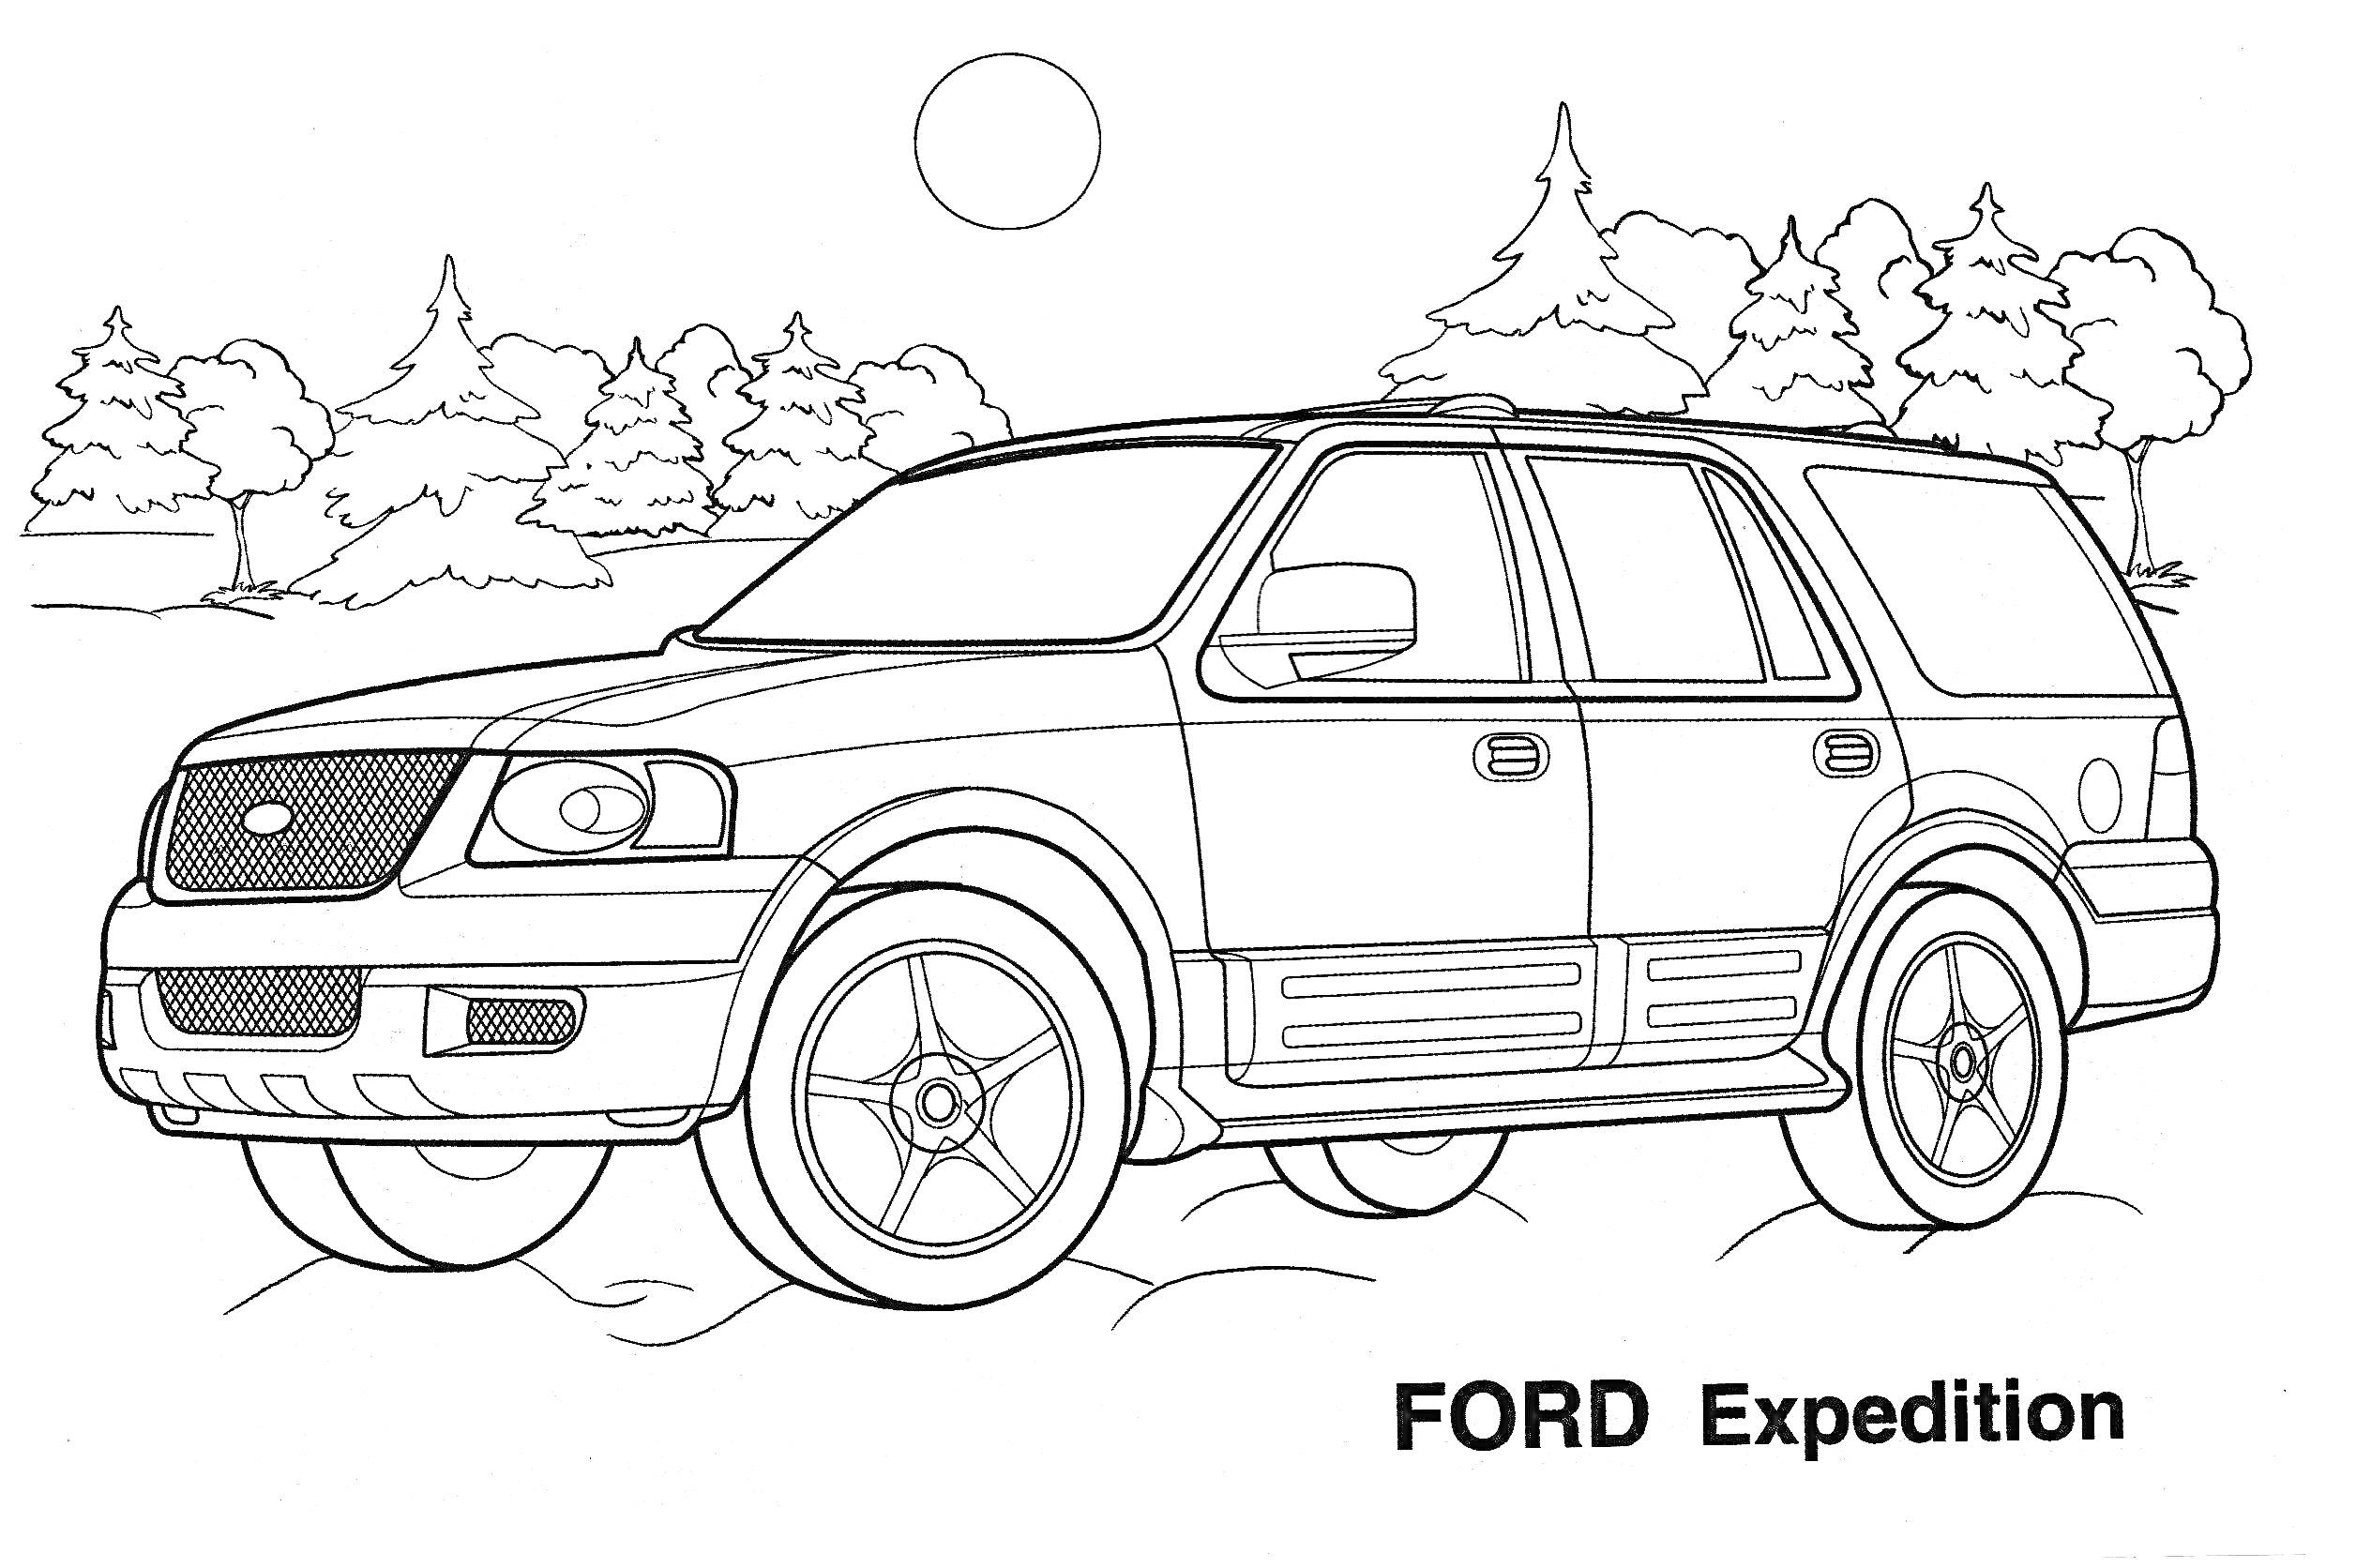 Грузовик Ford Expedition на фоне леса и солнца